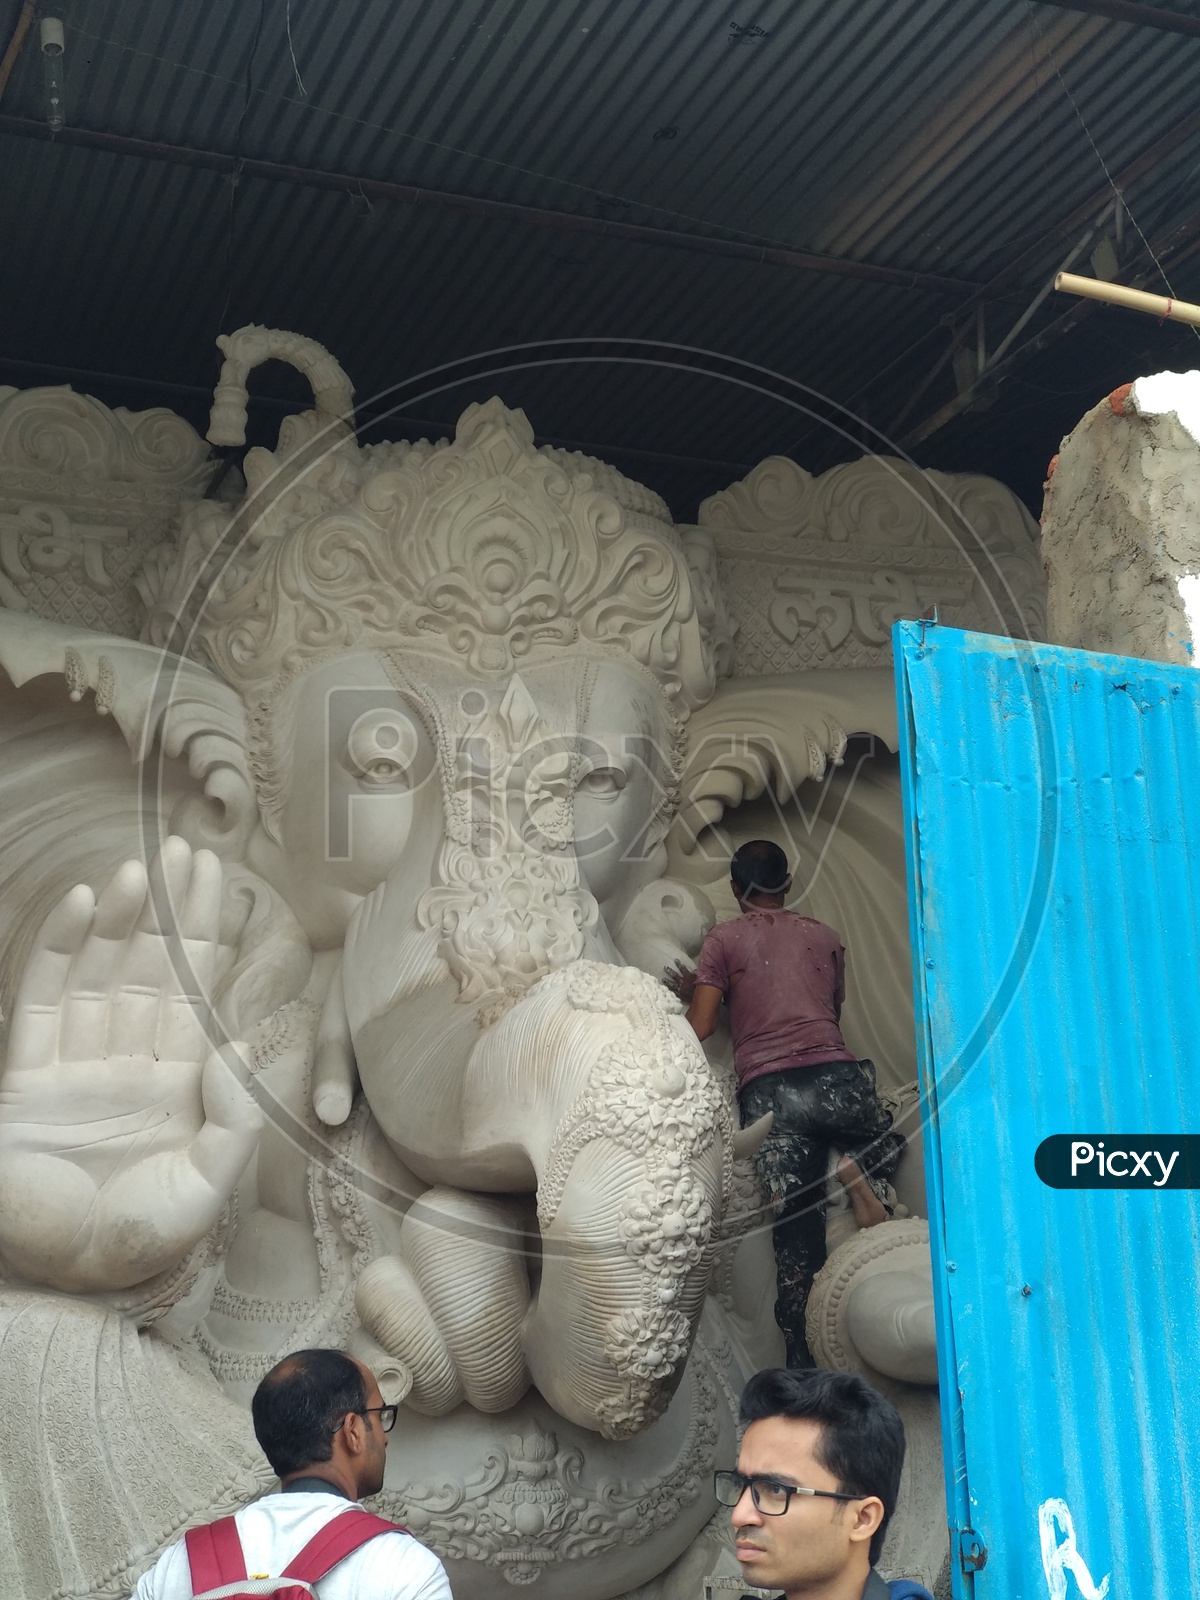 Prepartion of Ganesh Idol for Ganesh Chathurthi. A man working on idol for Vinayaka Chaturthi